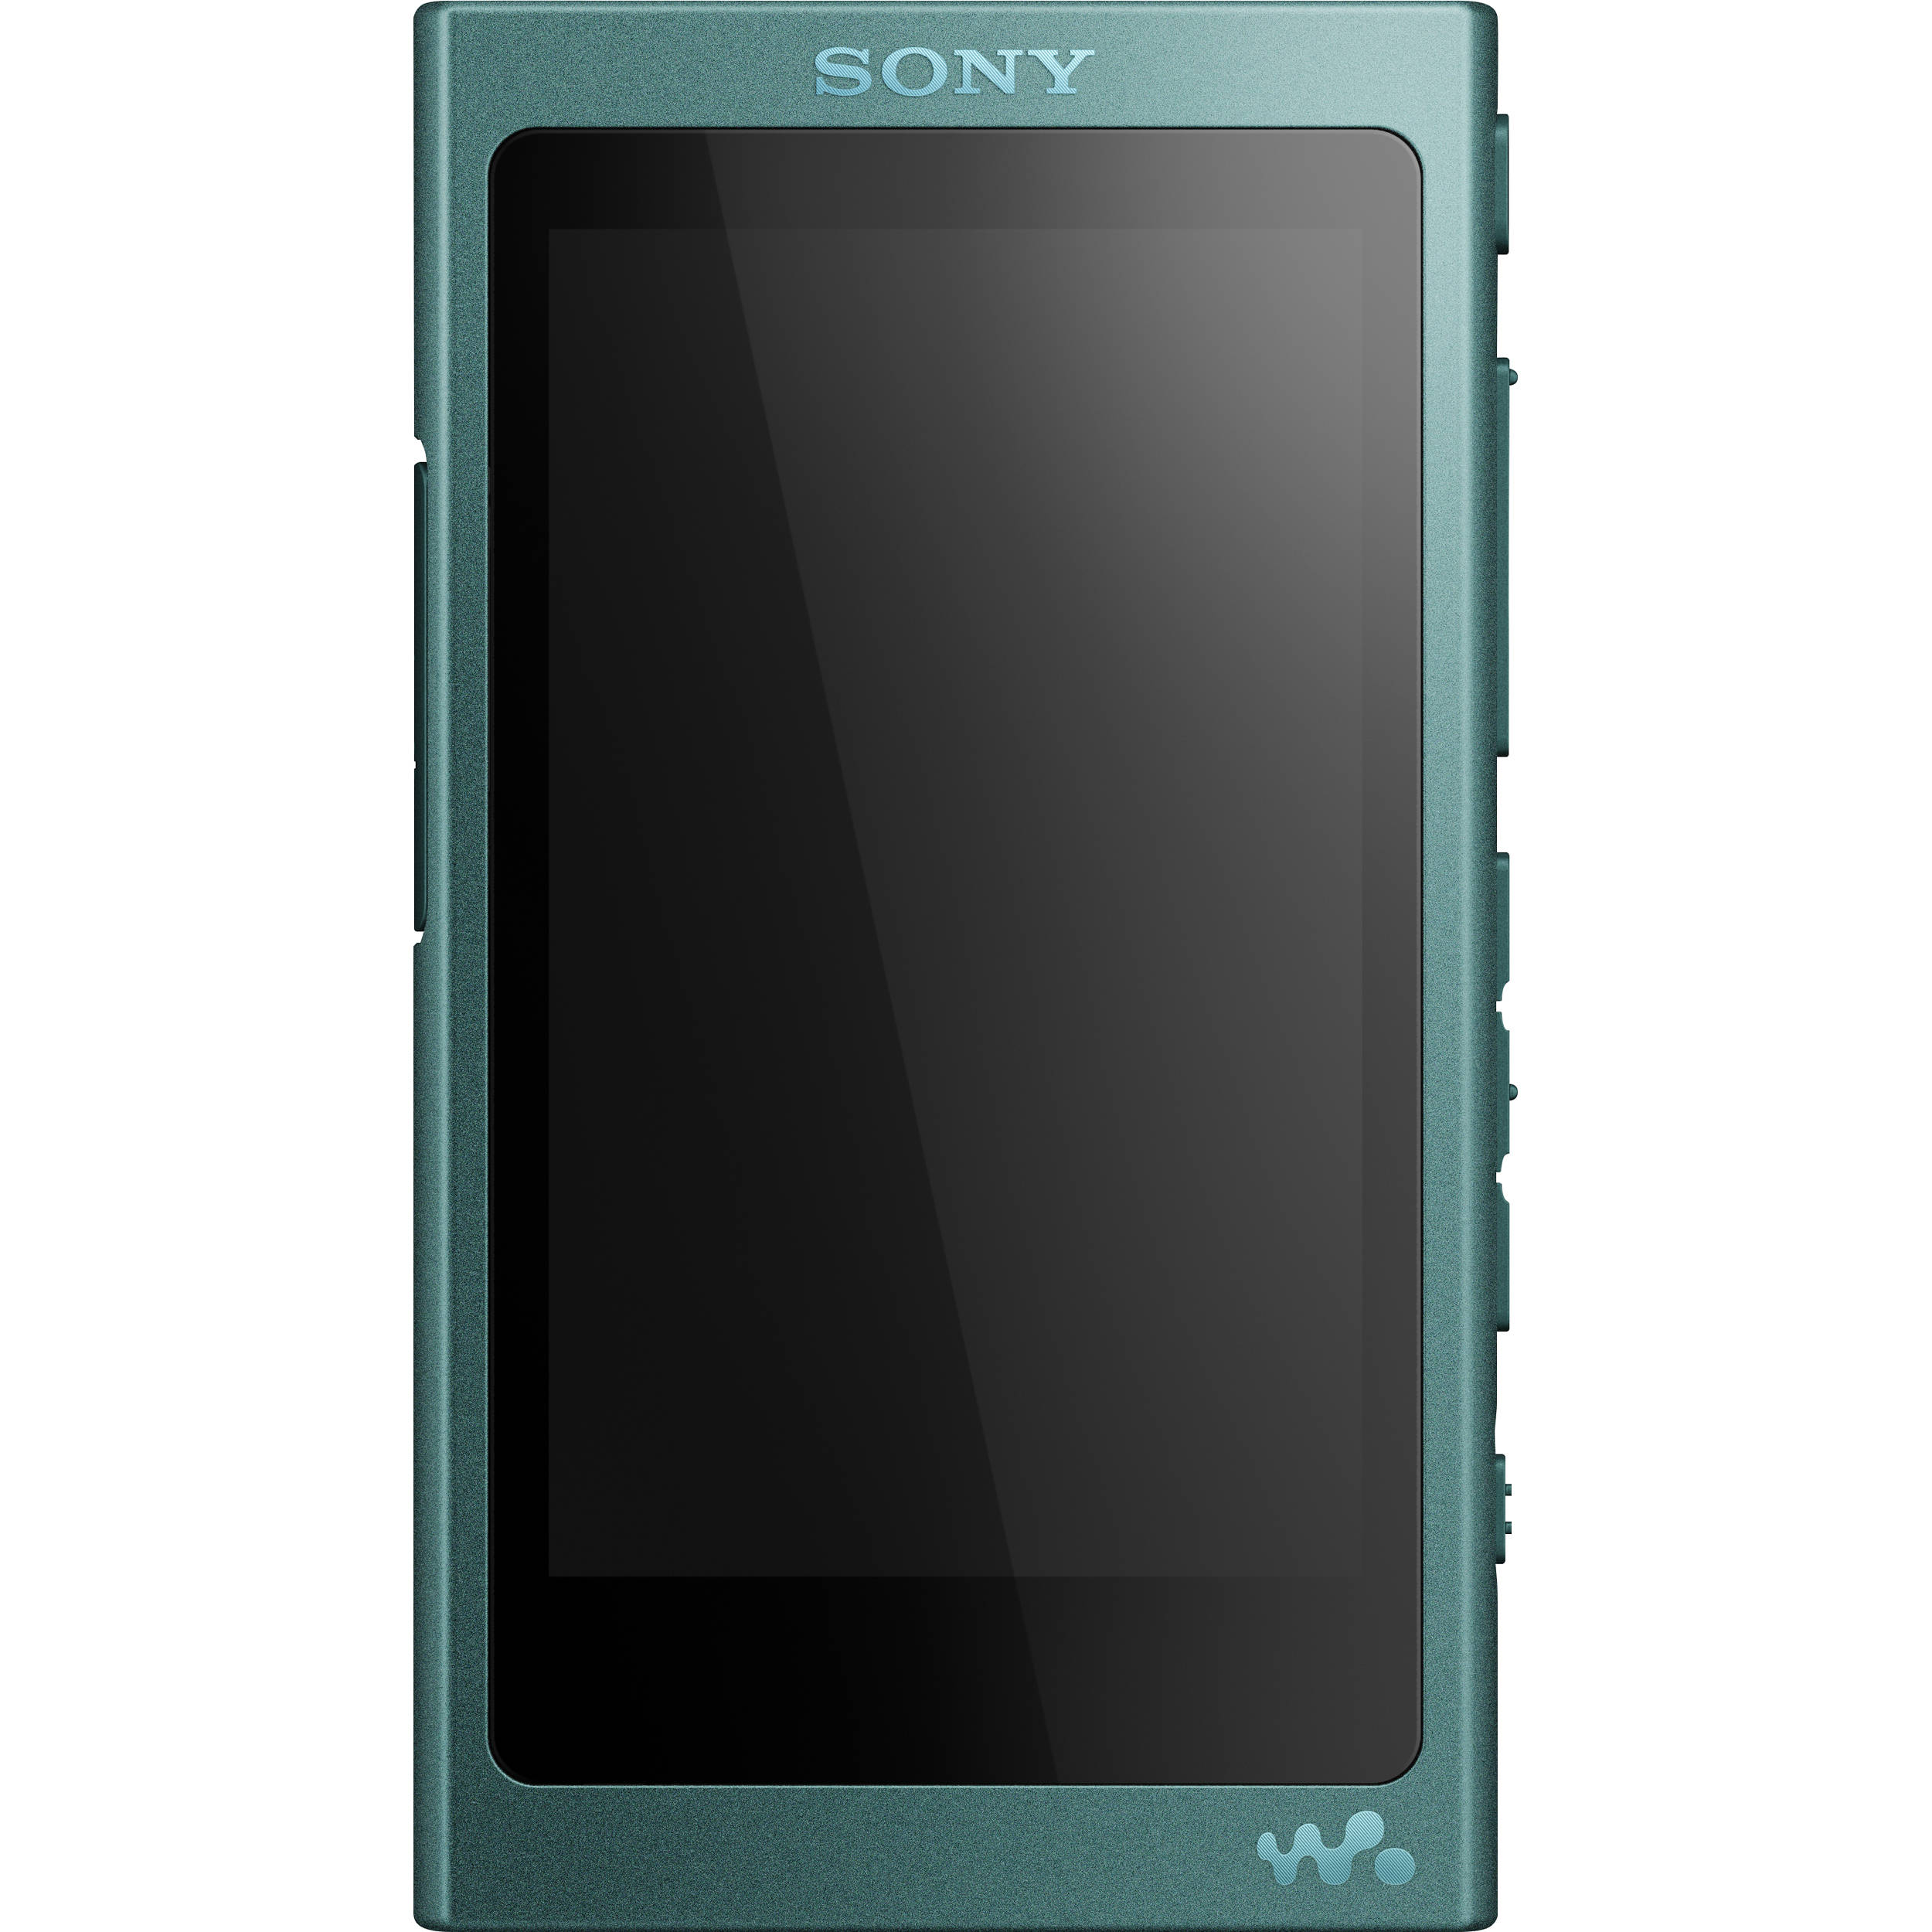 Sony NWA35 Walkman High Resolution 16GB MP3 Player - Blue